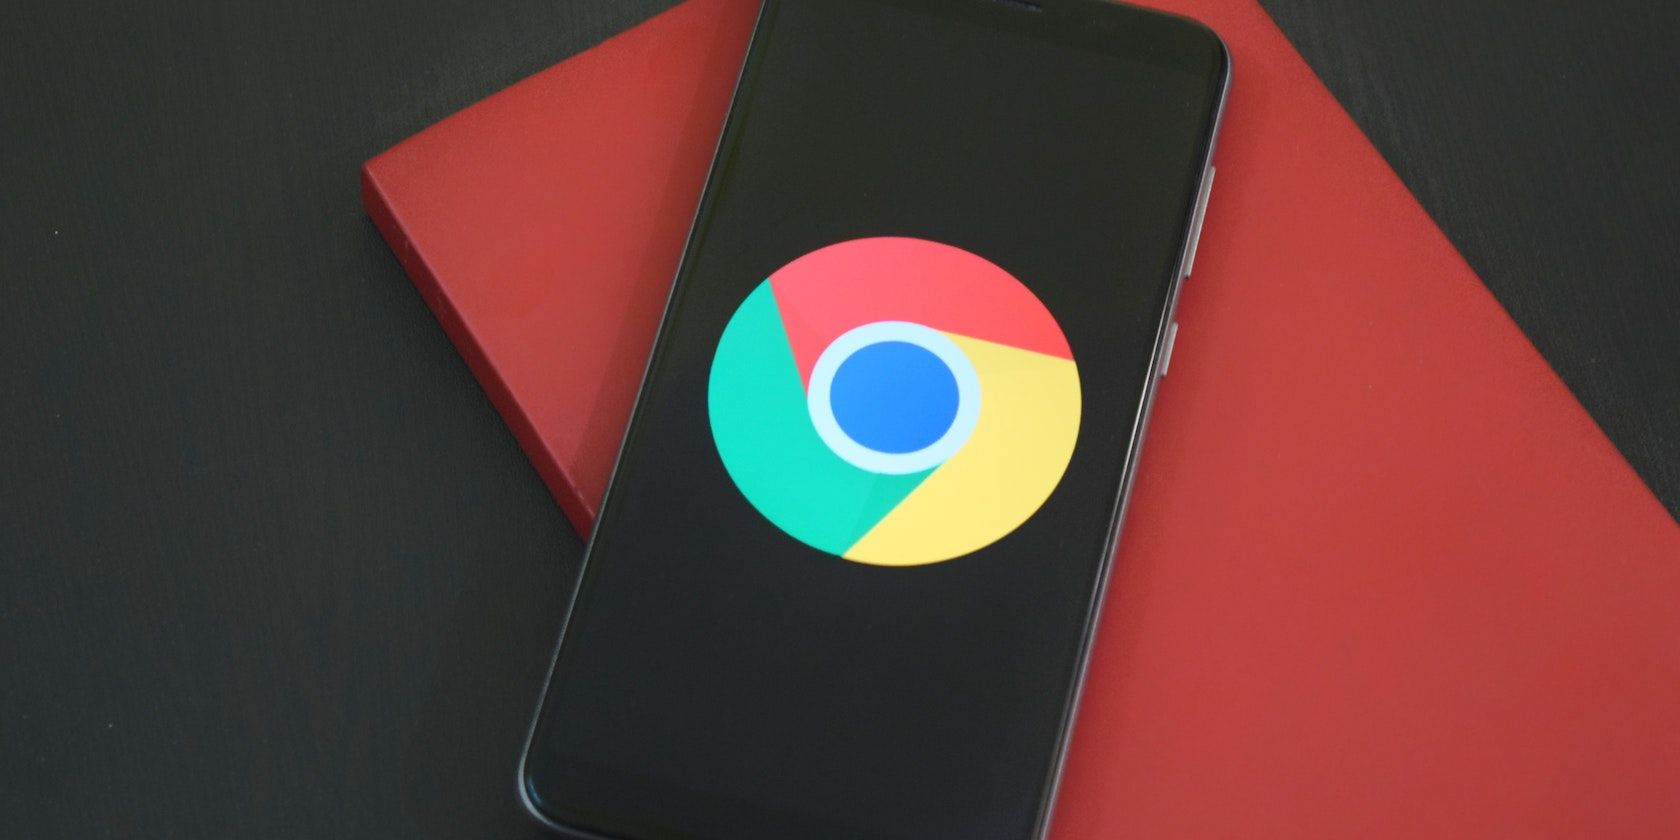 Google Chrome logo on a mobile phone